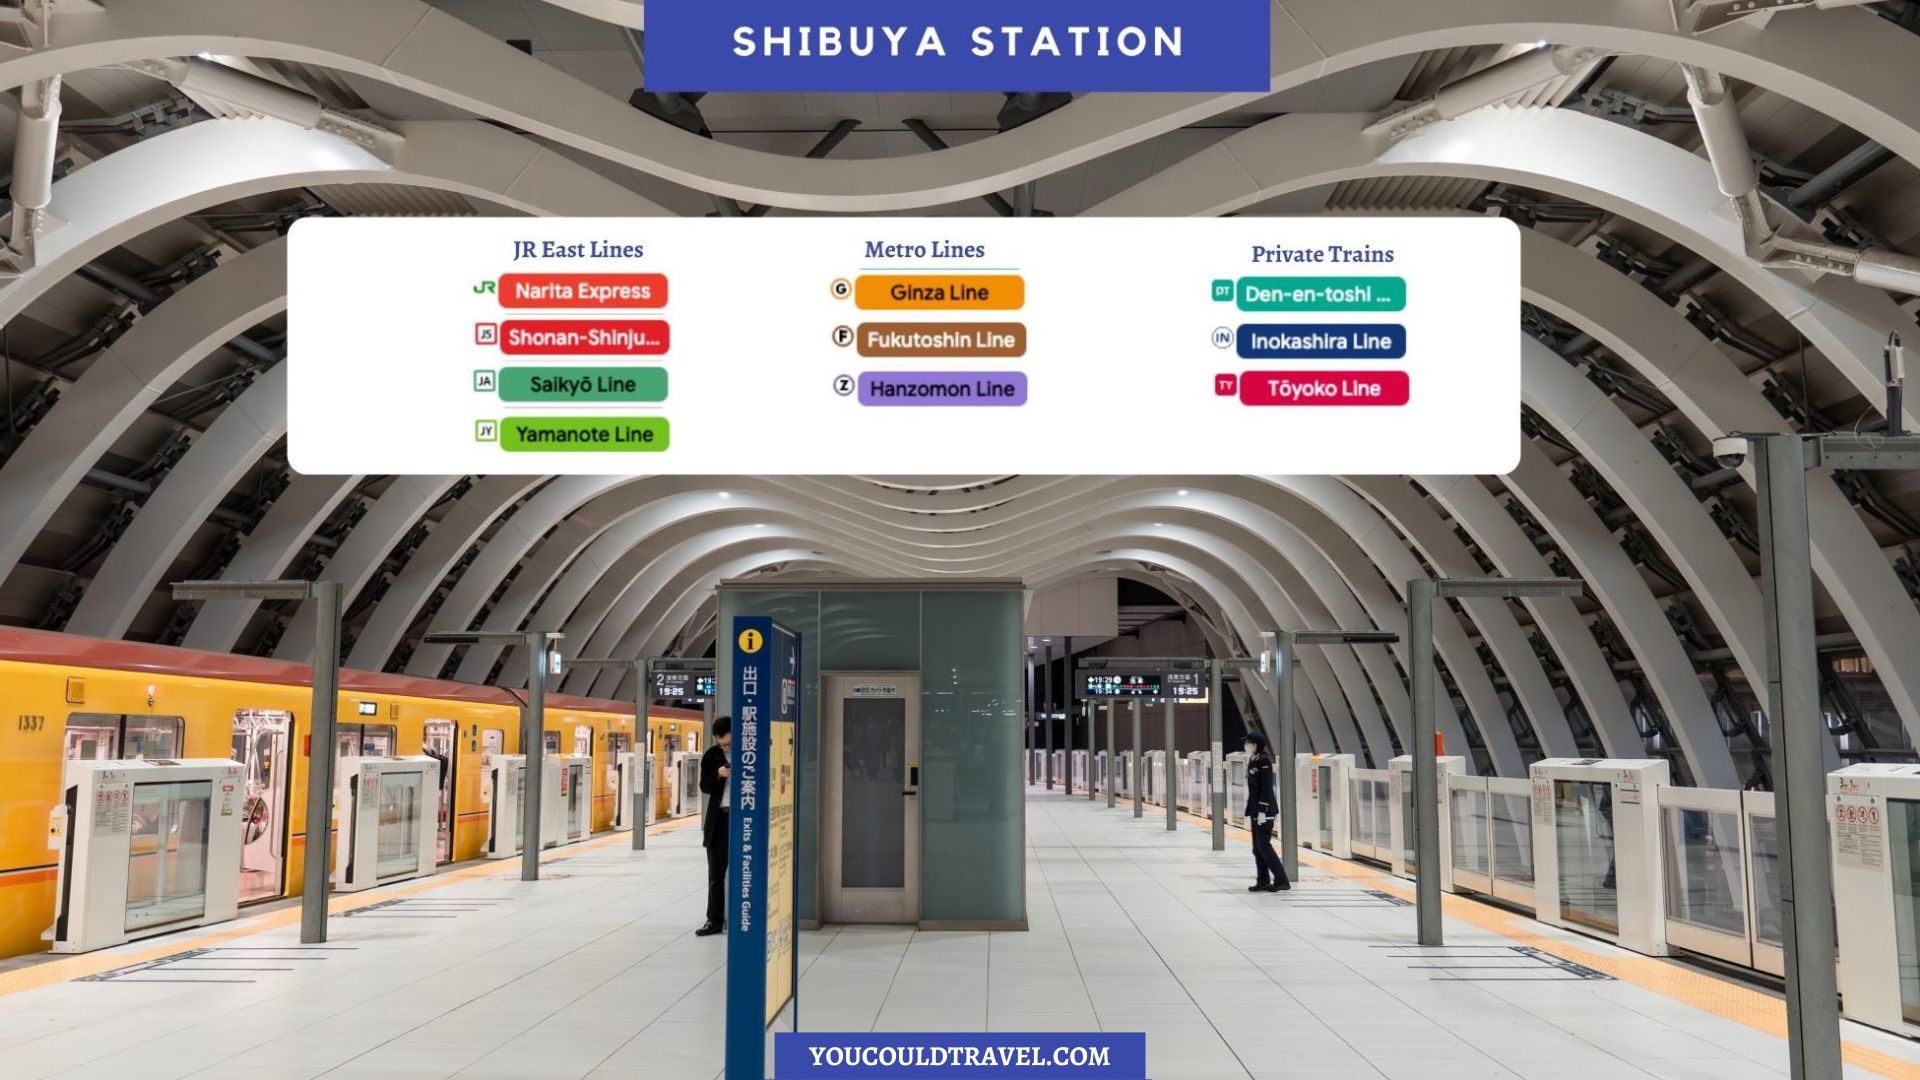 Getting around Shibuya (shibuya station train and subway lines)